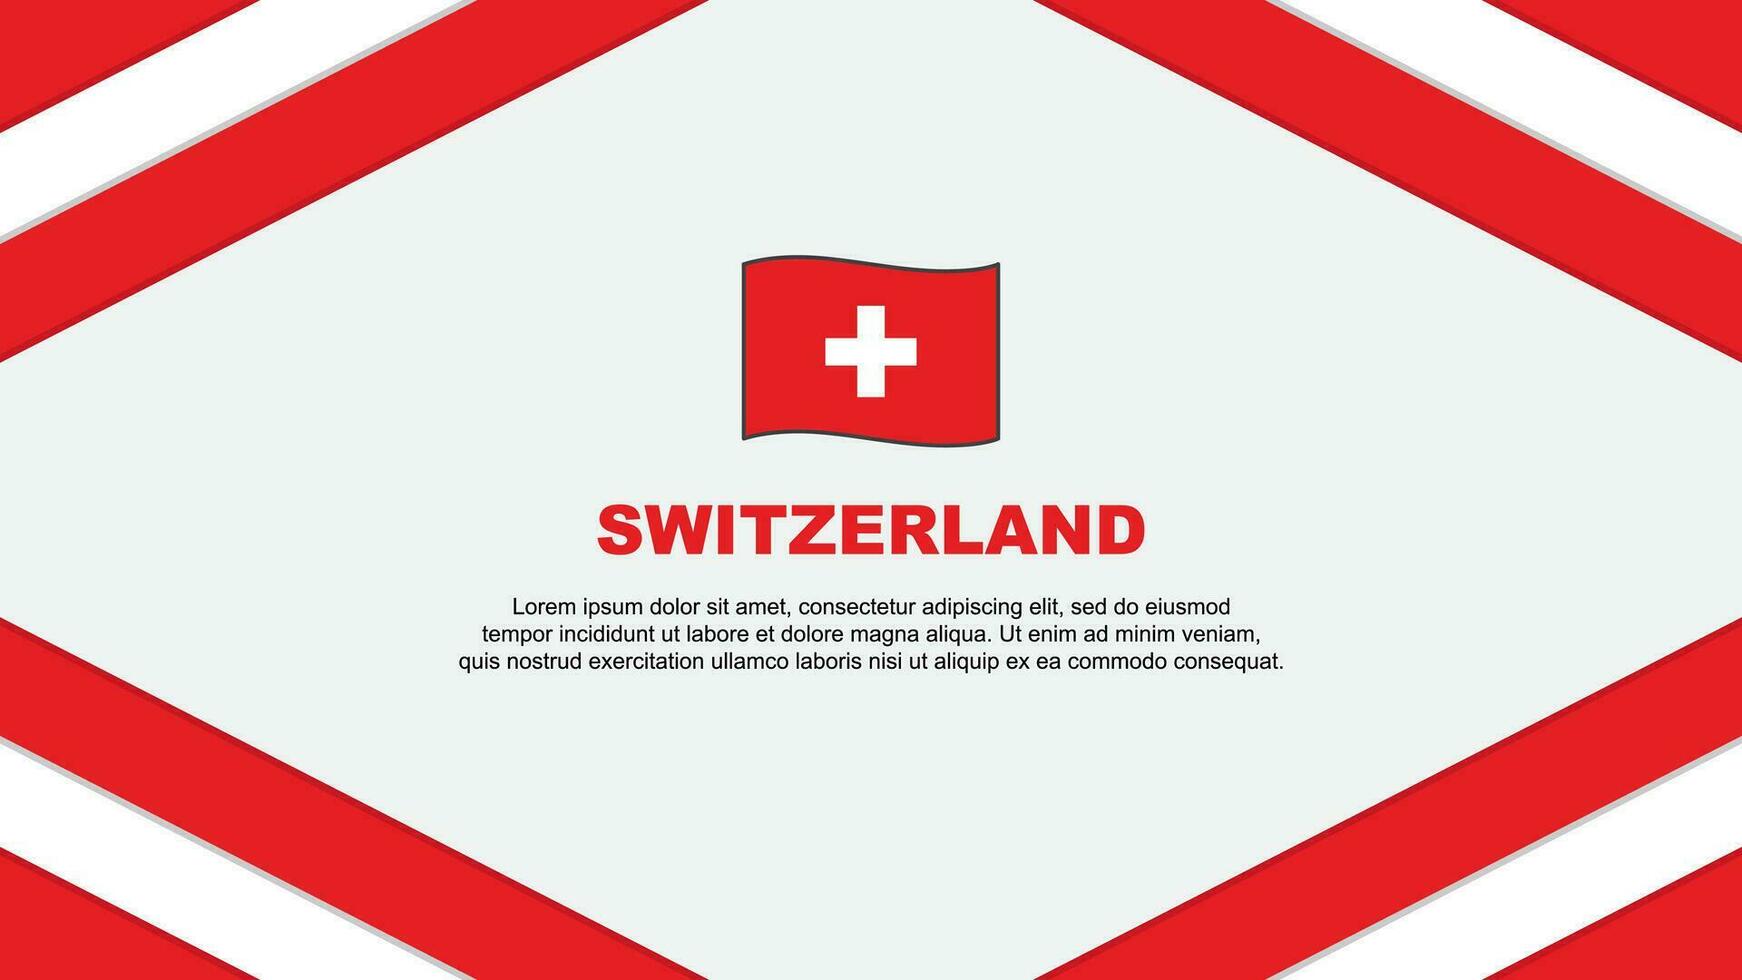 Switzerland Flag Abstract Background Design Template. Switzerland Independence Day Banner Cartoon Vector Illustration. Switzerland Template